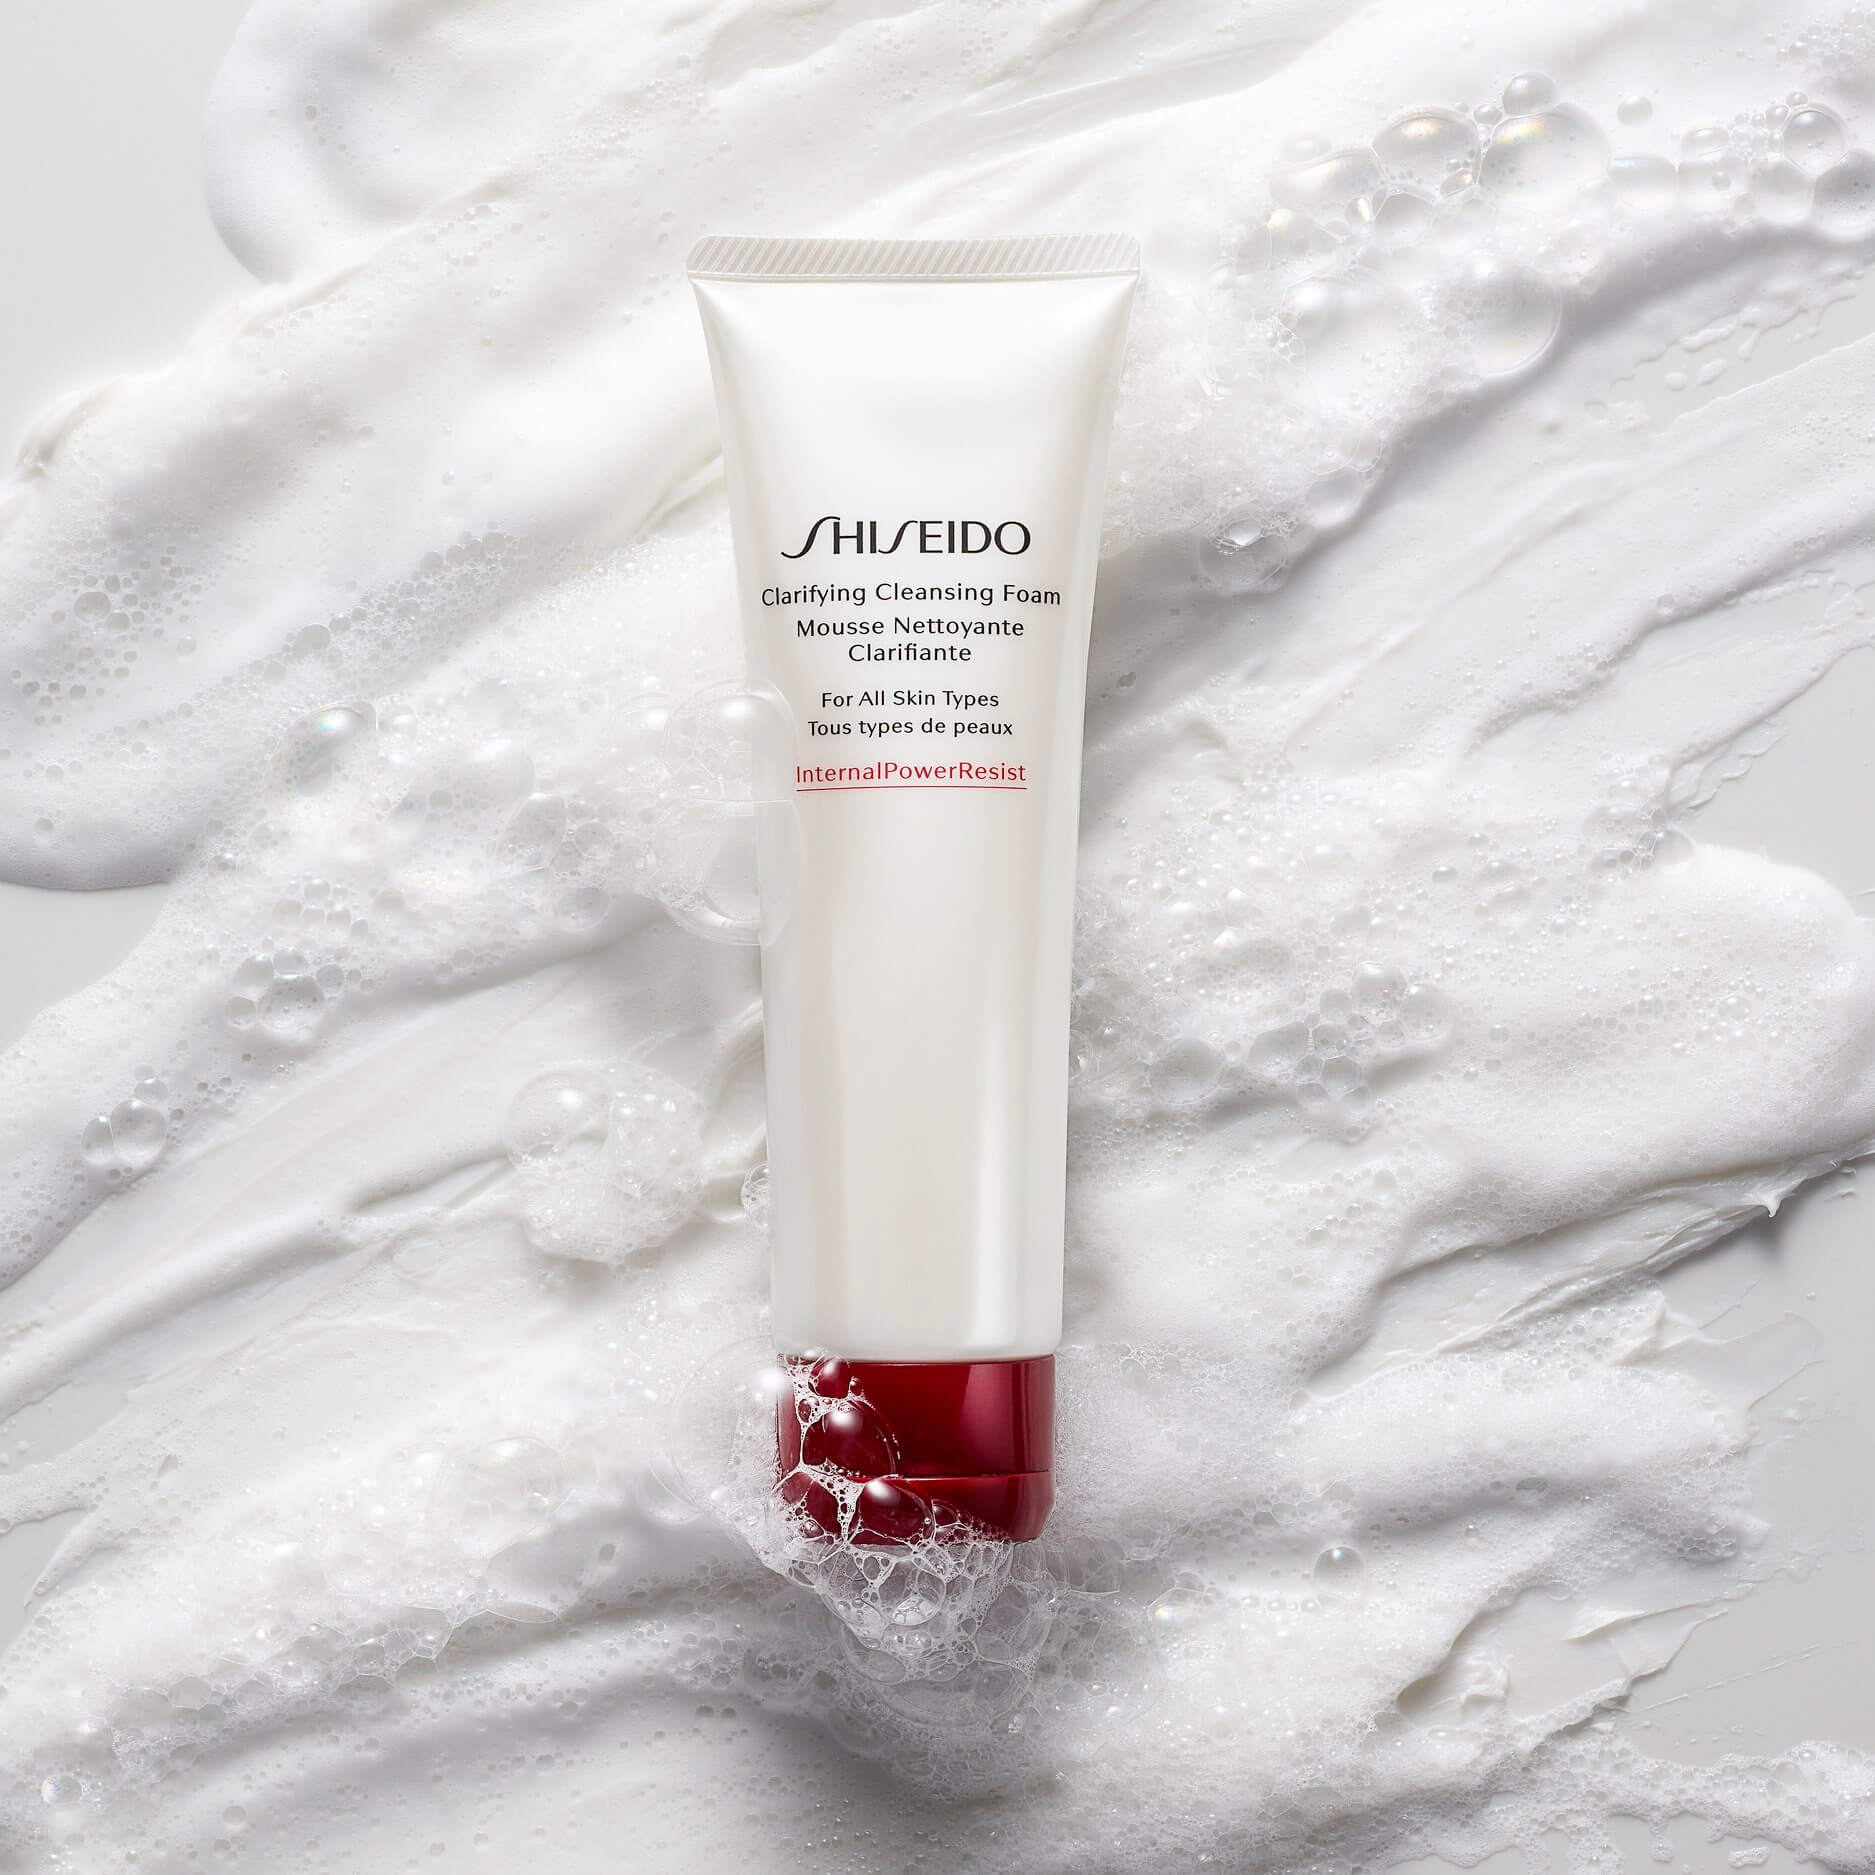 Shiseido Deep Cleansing Foam For Oily To Blemish-Prone Skin 50 ml โฟมล้างหน้า สำหรับคนผิวมันและบอบบาง ช่วยทำความสะอาดผิวหน้าอย่างล้ำลึกถึงรูขุมขน ขจัดไขมันส่วนเกิน สารมลพิษ